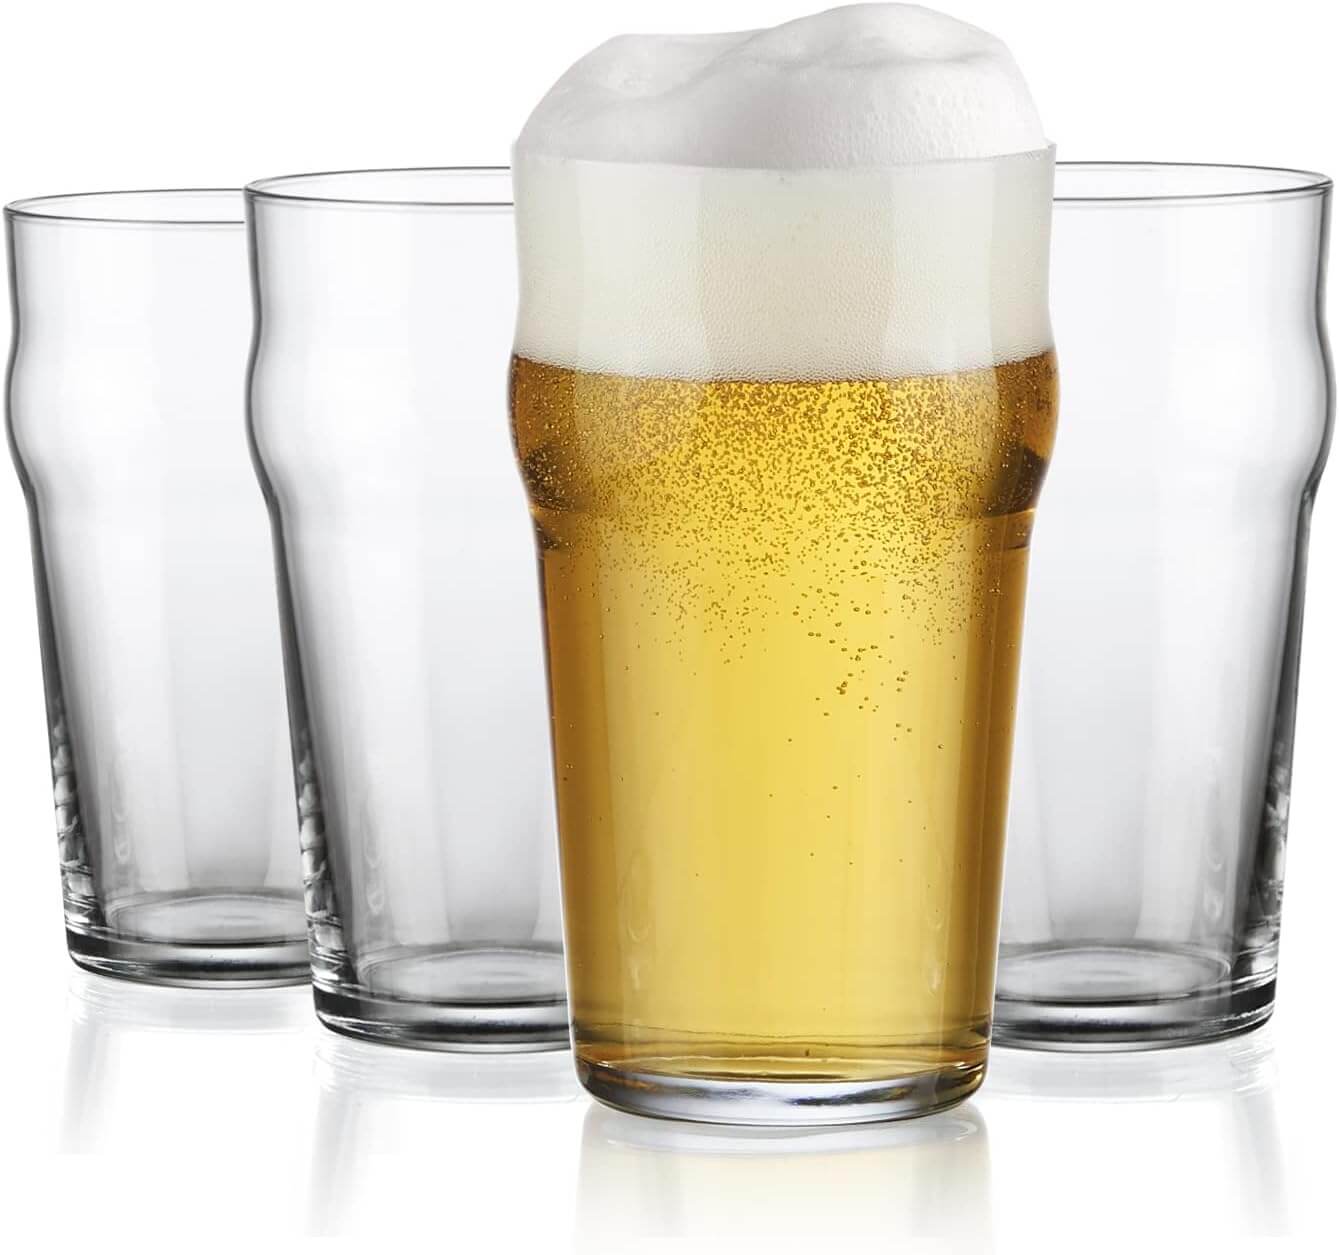 Set of 4 imperial pint beer glasses